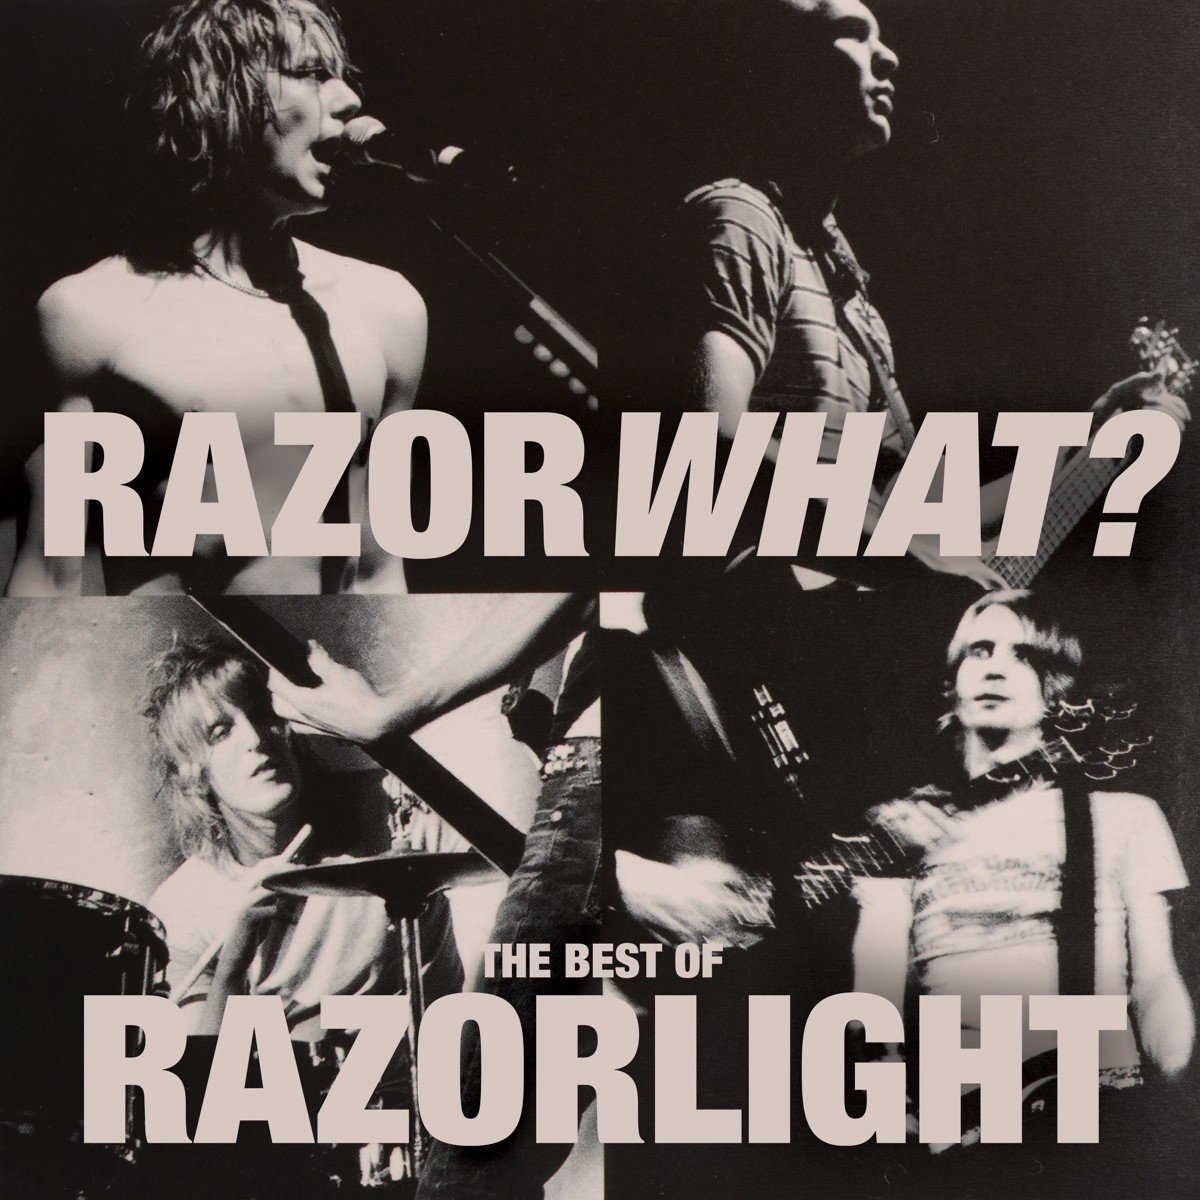 Razorlight - Razorwhat? (CD) - Razorlight